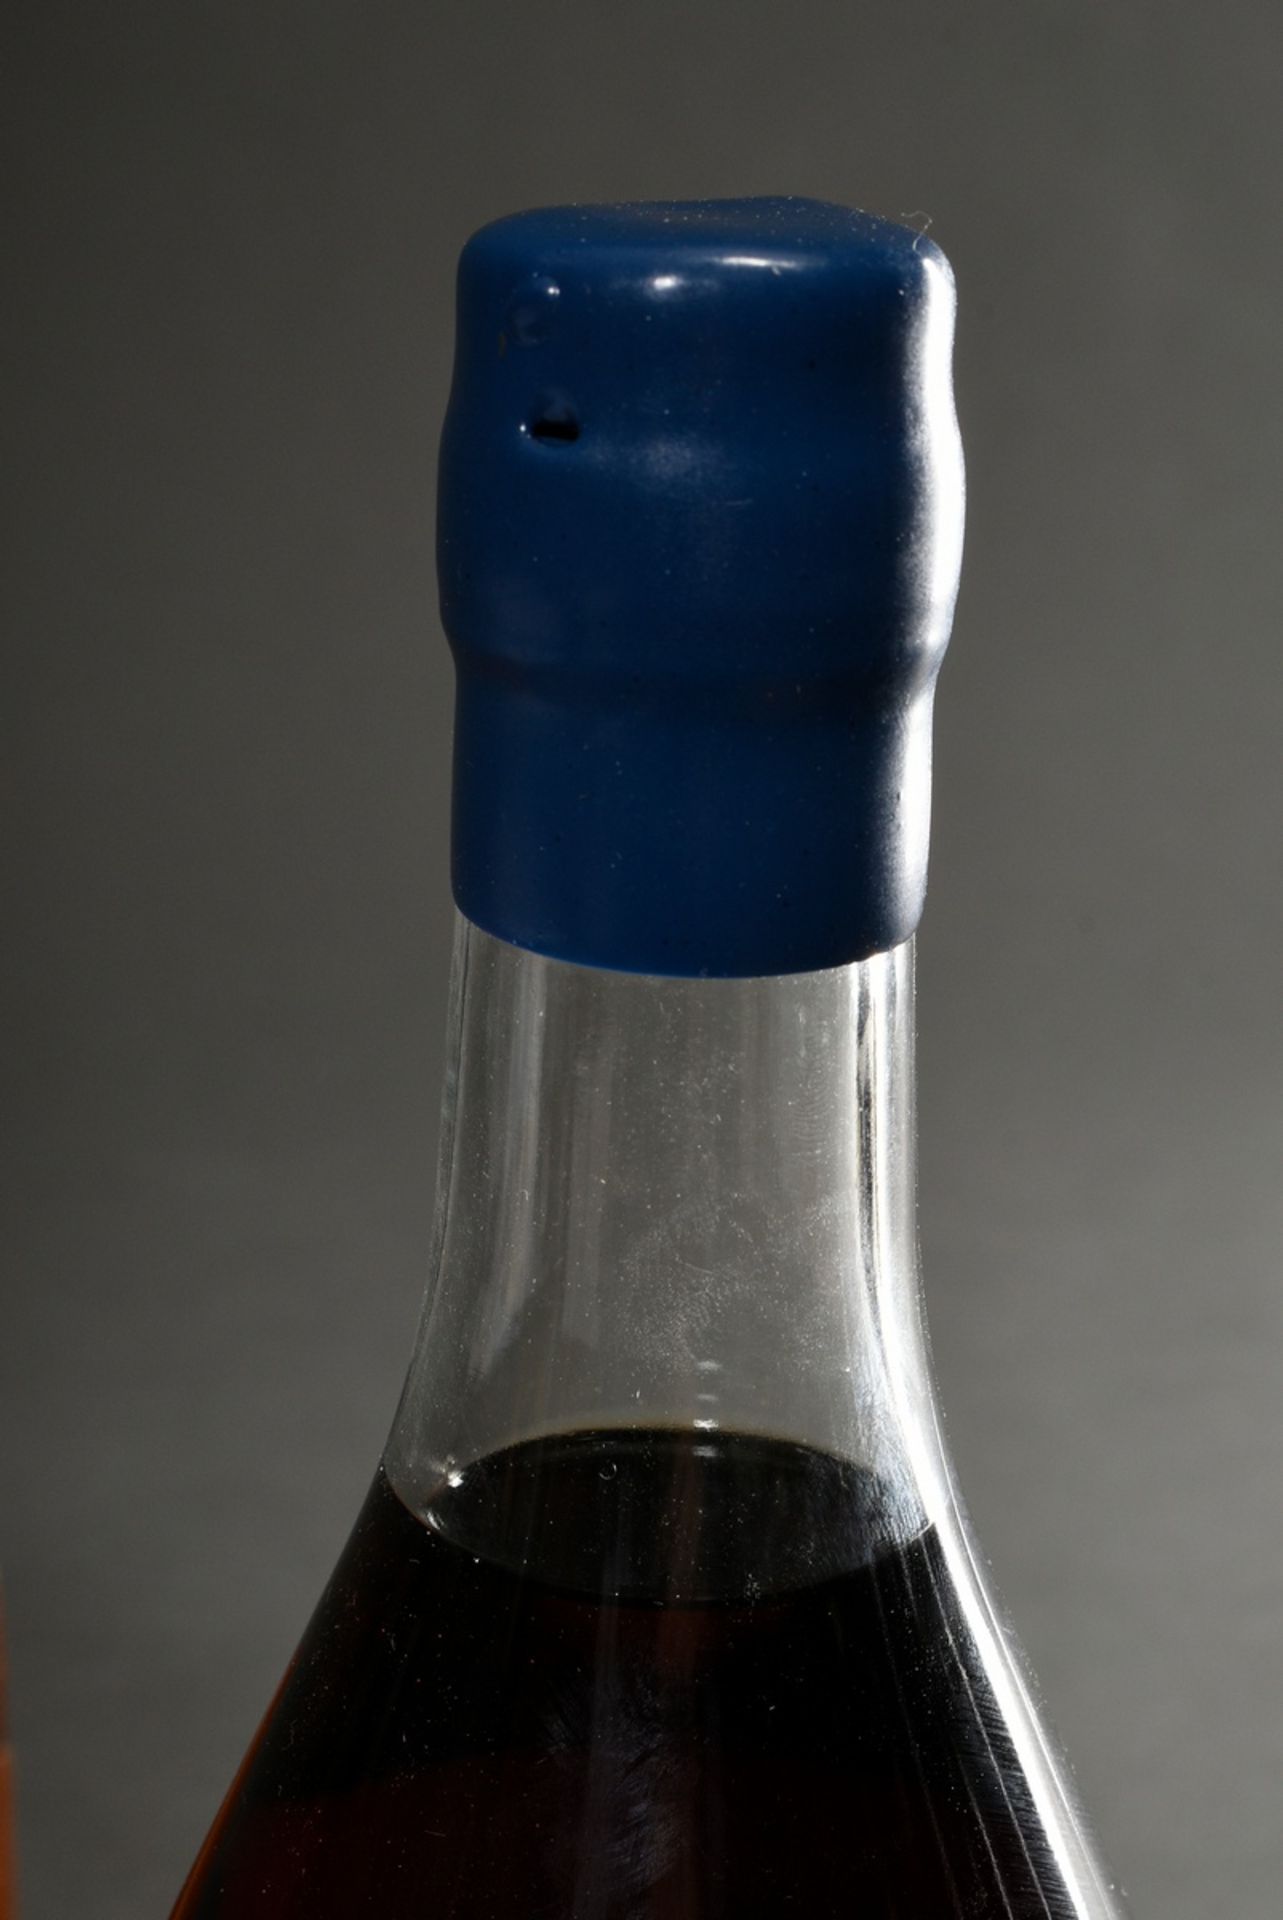 Bottle of Armagnac "Baron de Sigognac" 1923, in original wooden box with brass label, Gers, France, - Image 3 of 7